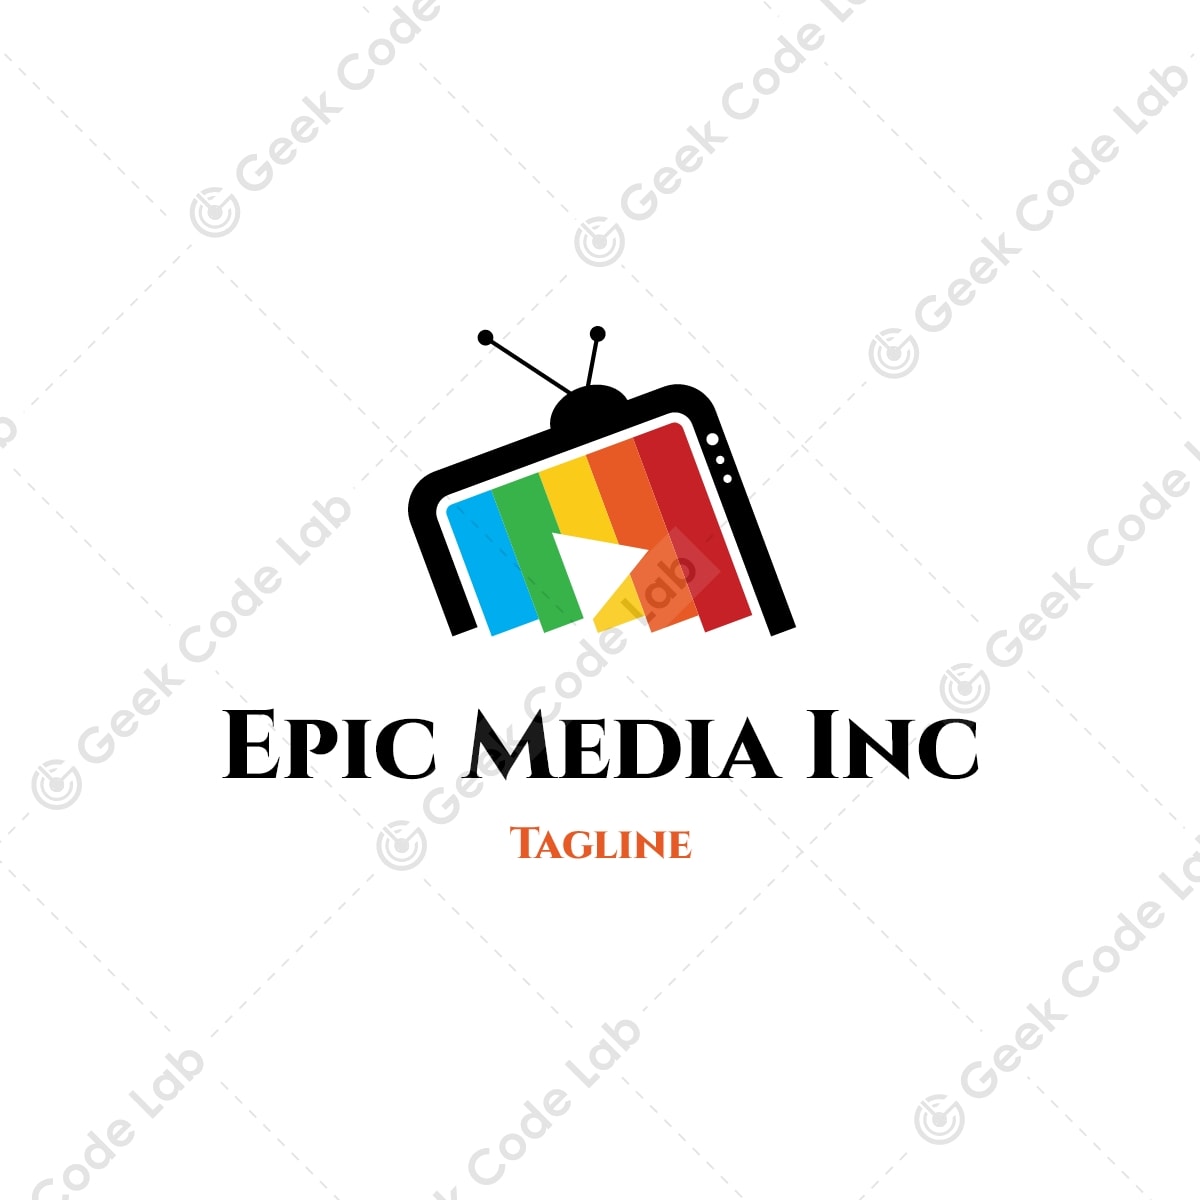 Epic Media Inc